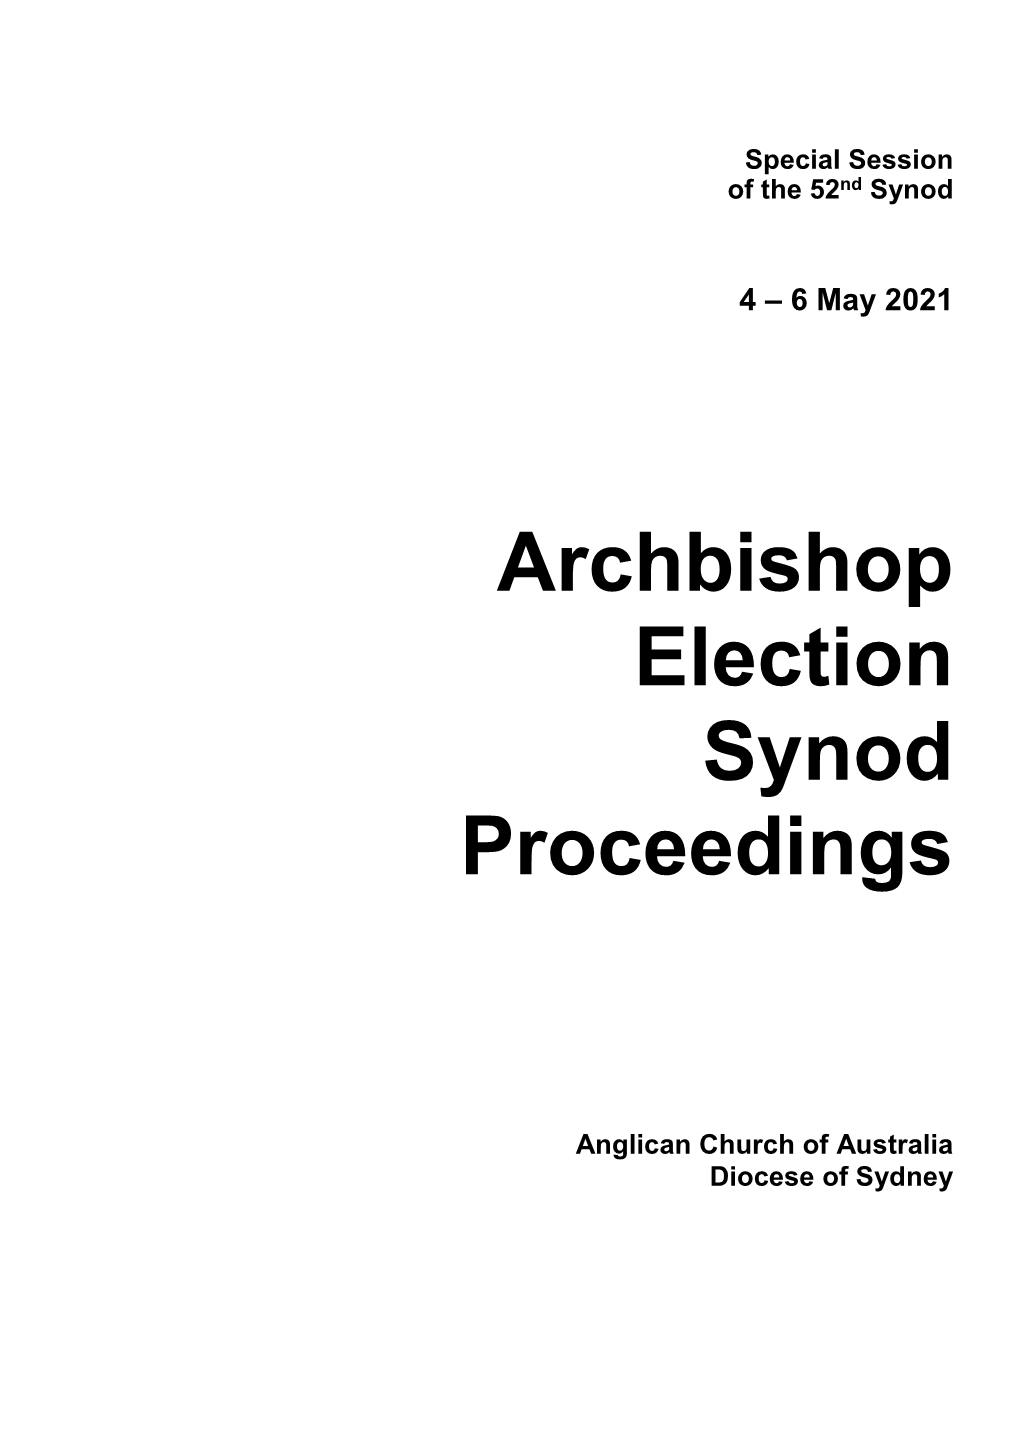 Archbishop Election Synod Proceedings